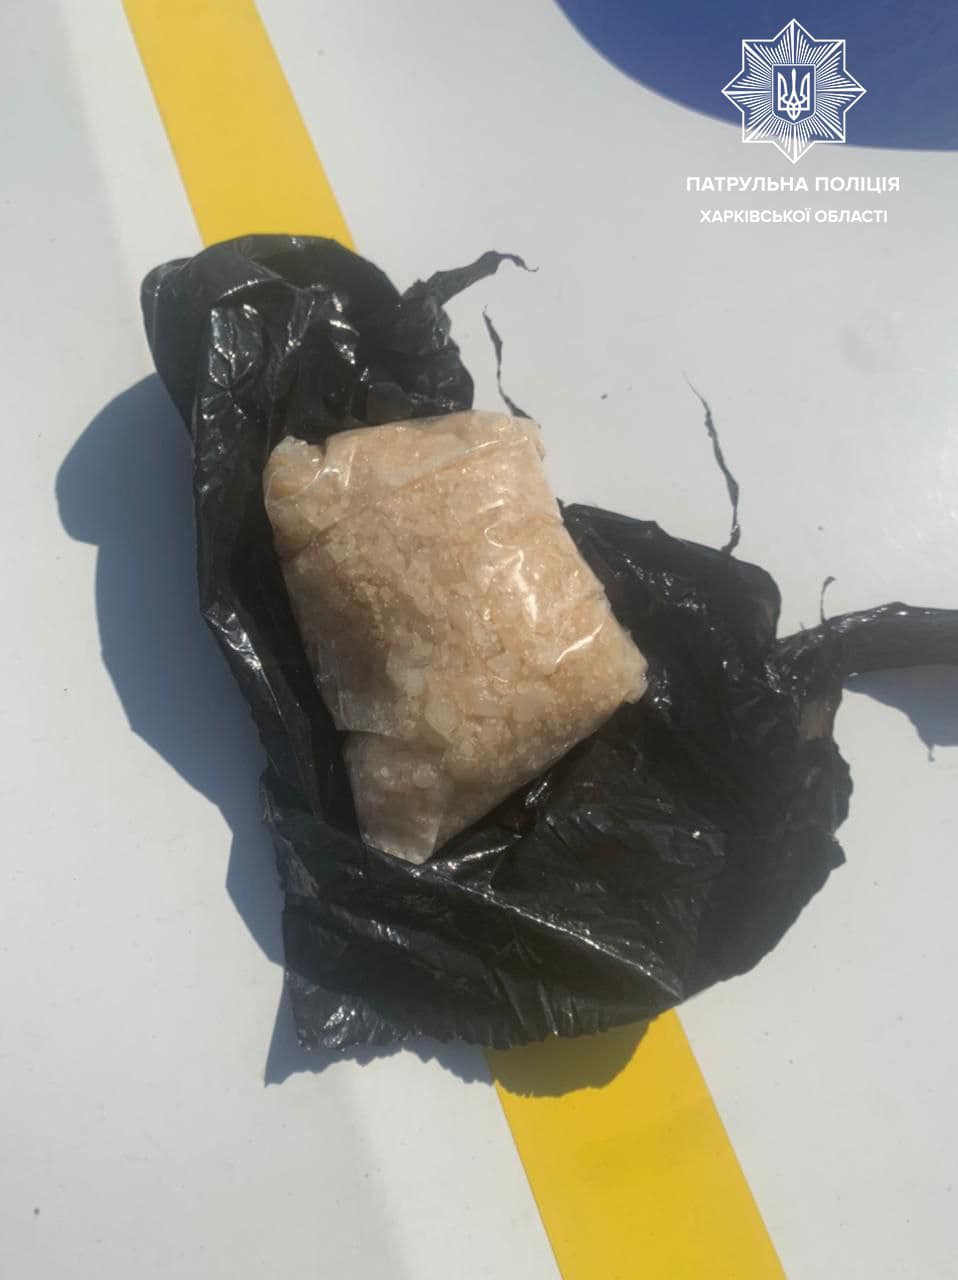 Пакет с наркотиками обнаружили у харьковчанина